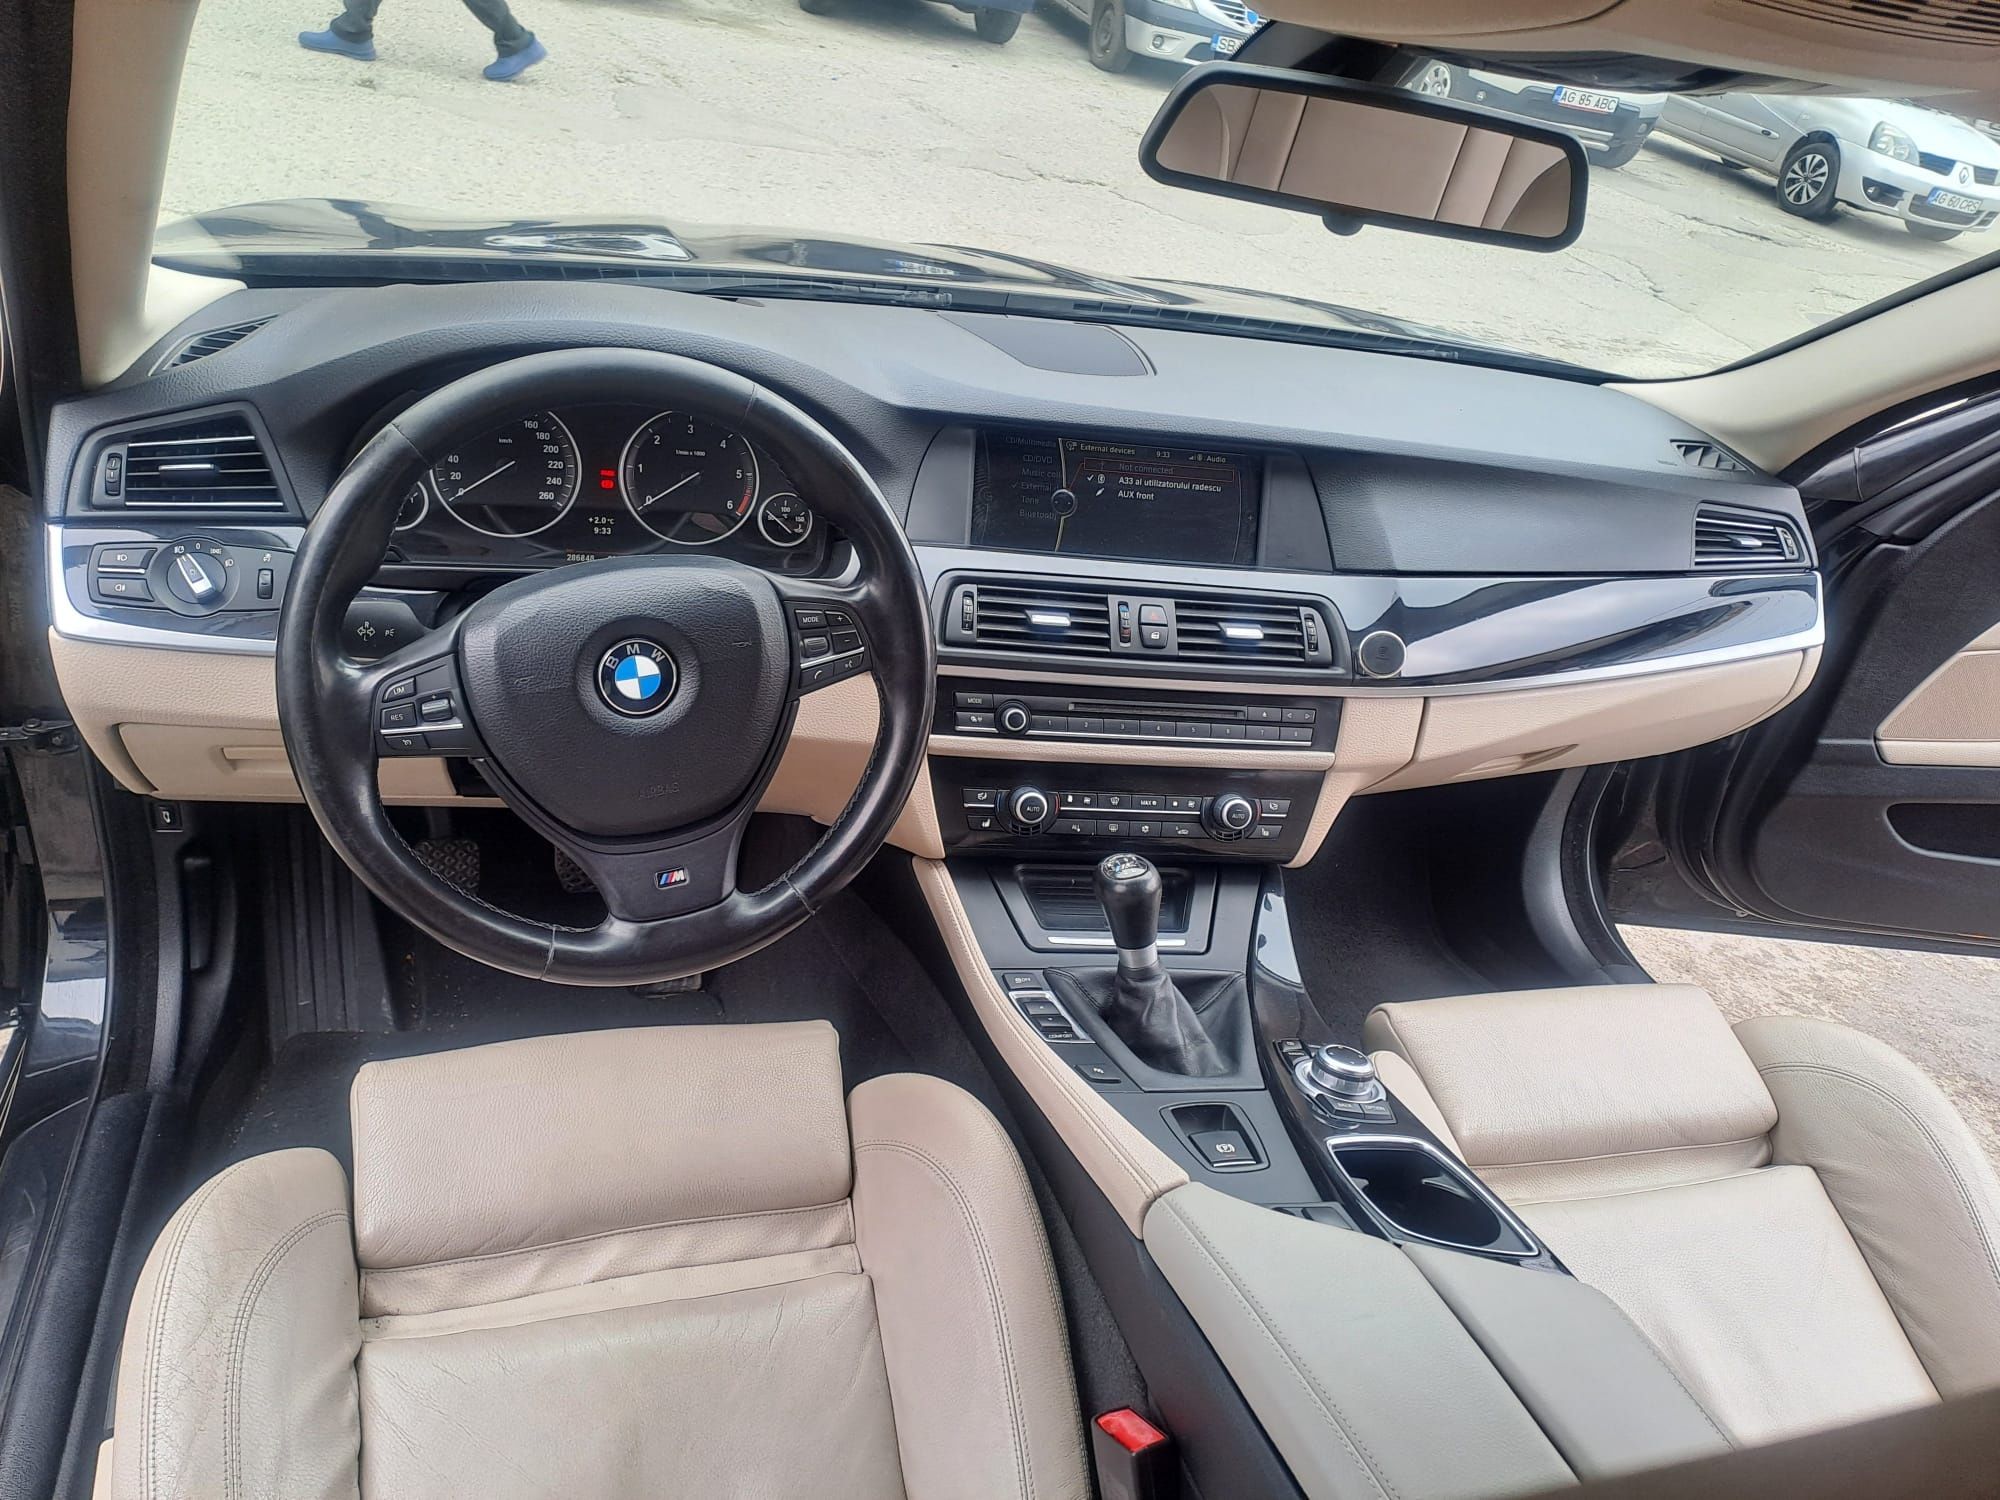 BMW f10 520d euro5